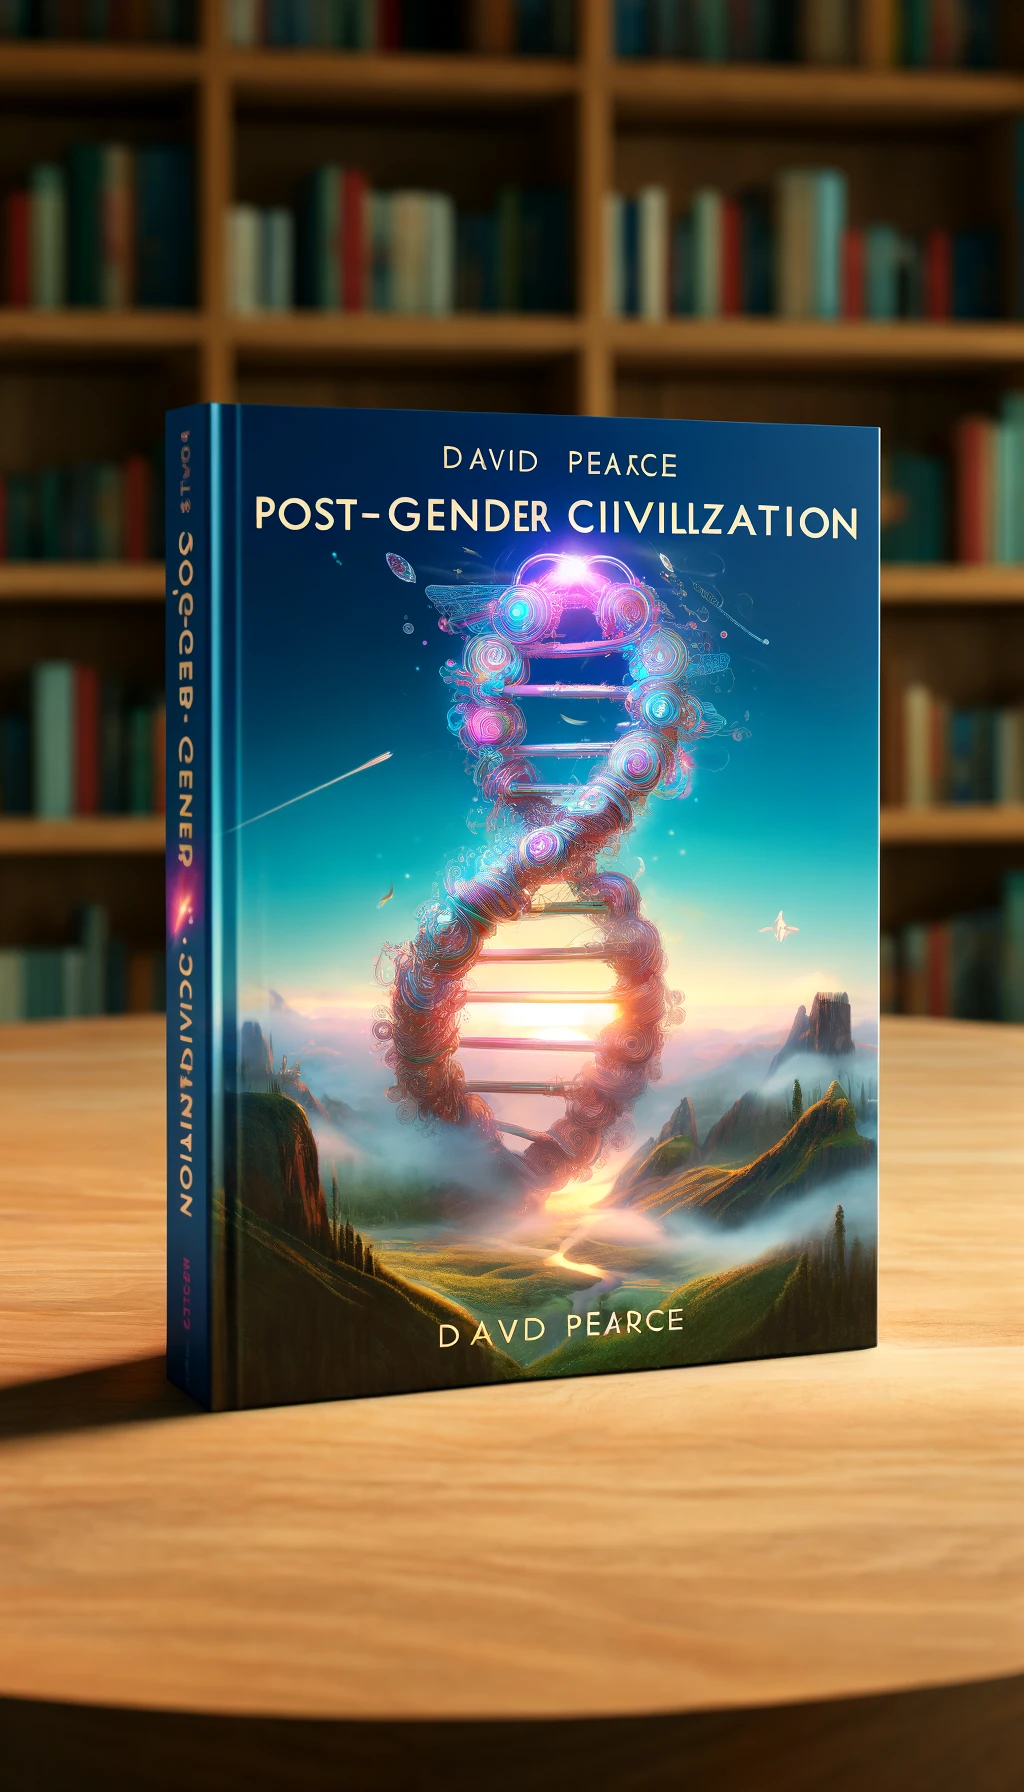 Post-Gender Civilization by David Pearce